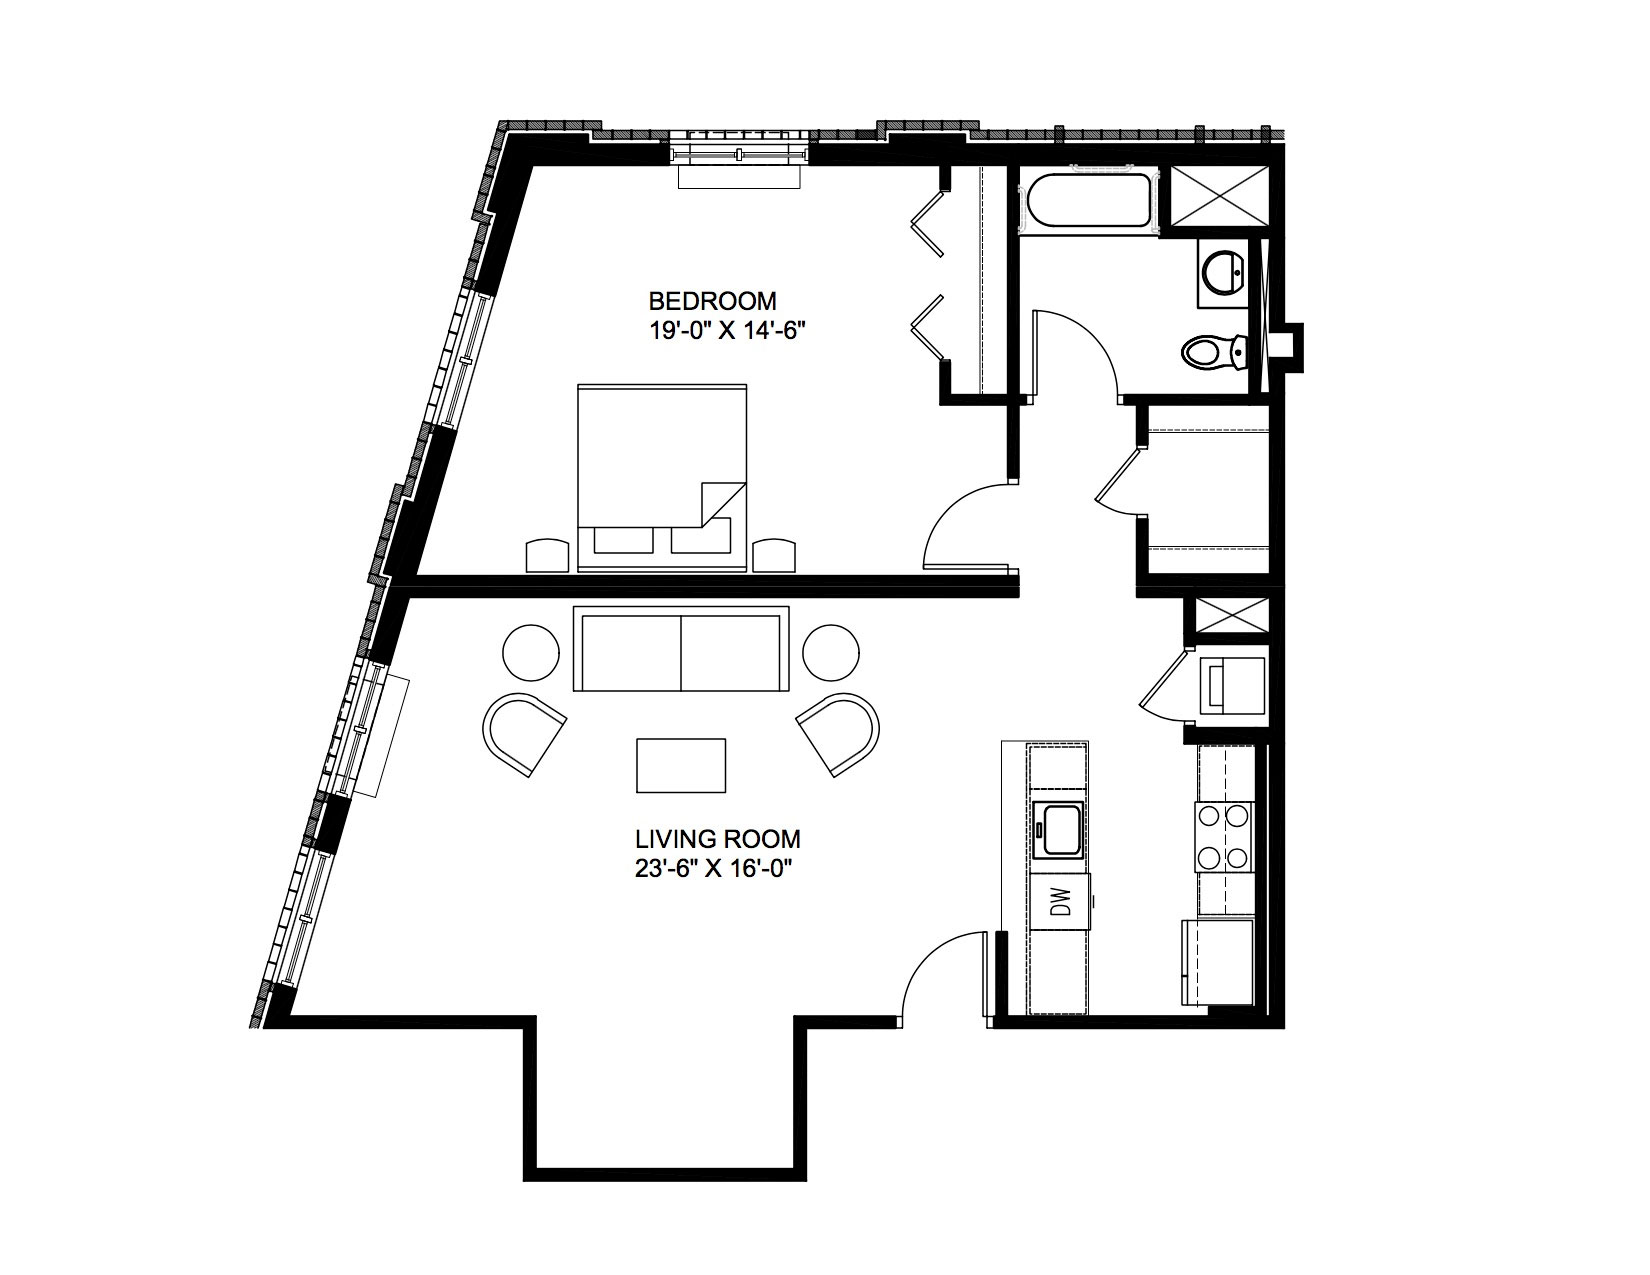 One bedroom floorplan 2